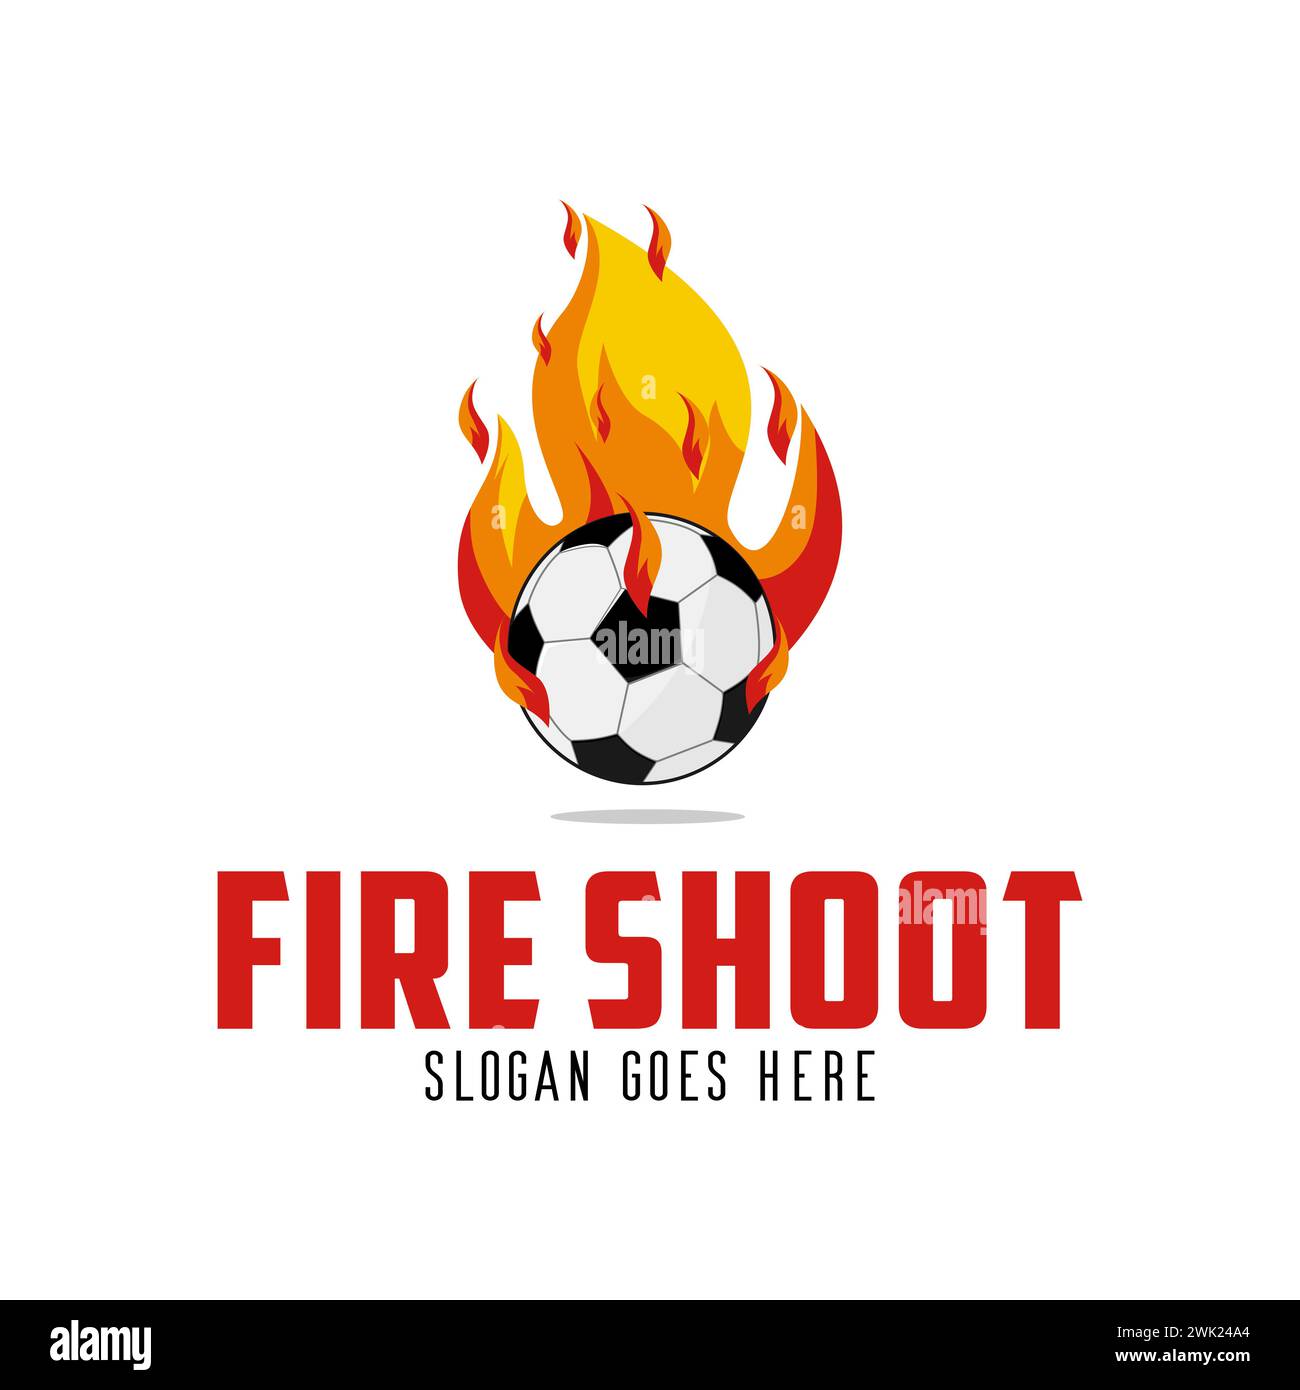 Fire Shoot Logo Design. Abstract Soccer Ball Combination With Fire Concept Symbol Design Stock Vector